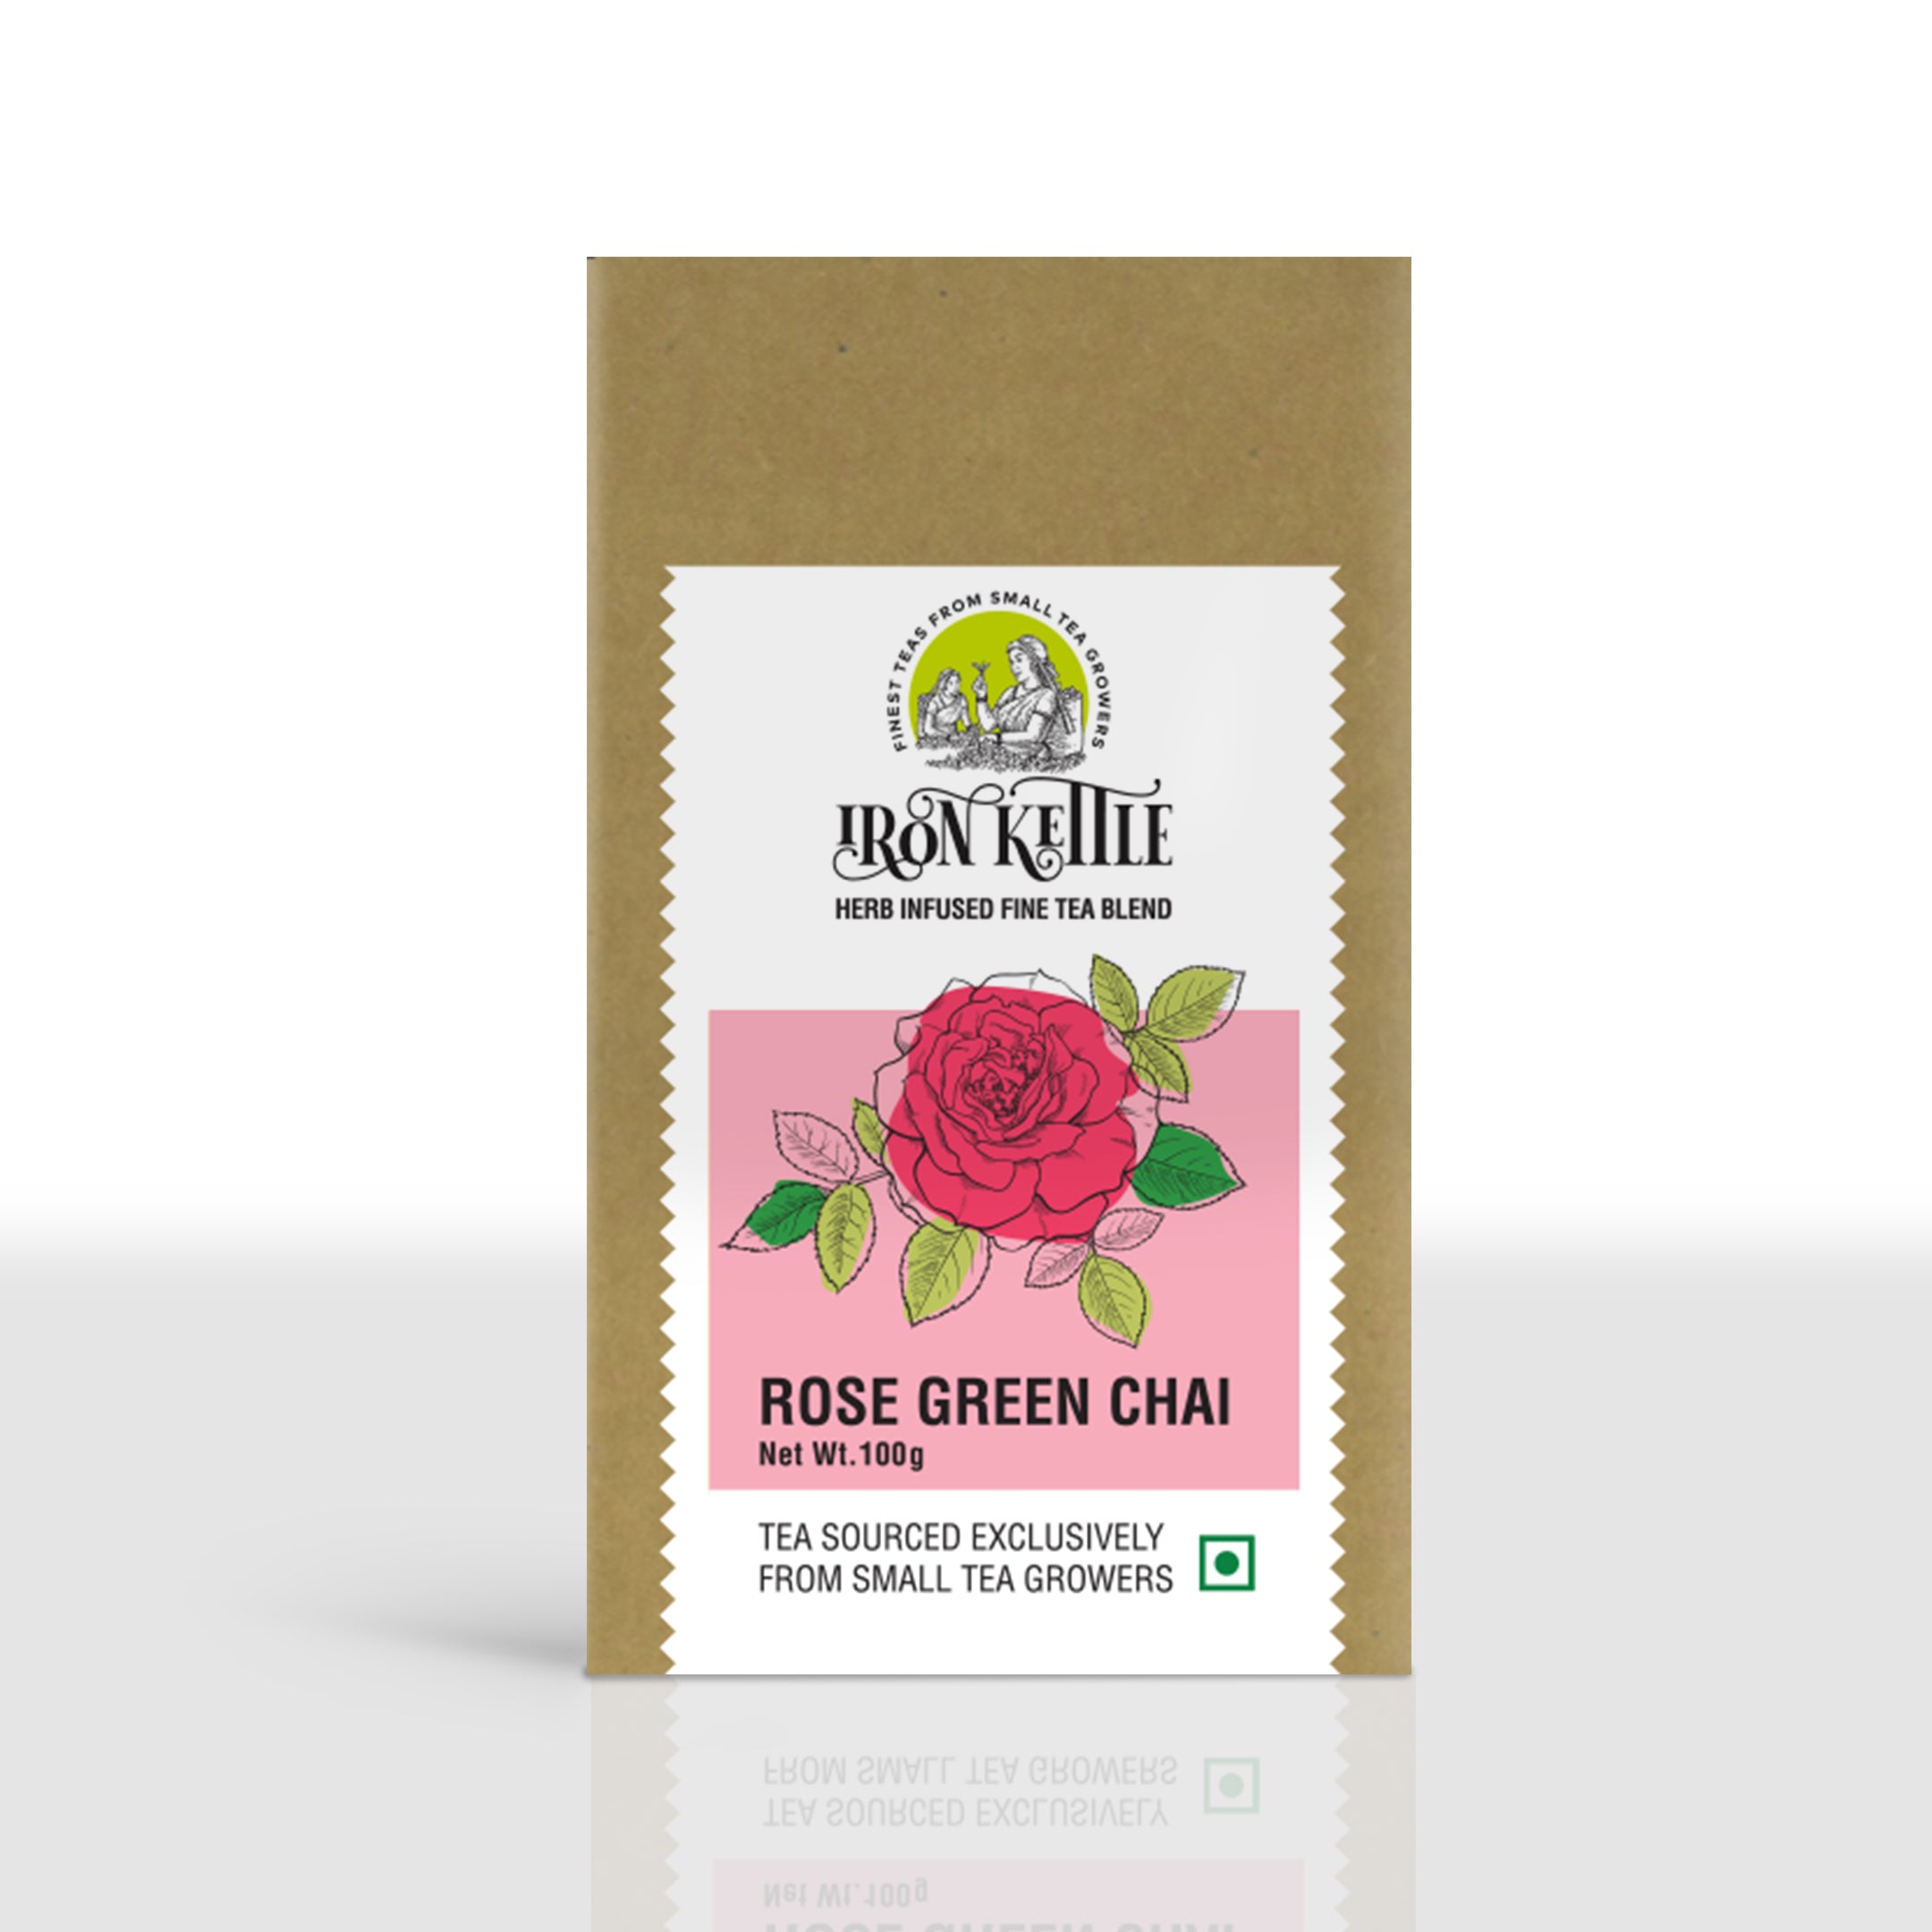 Rose Green Chai - Iron Kettle Tea